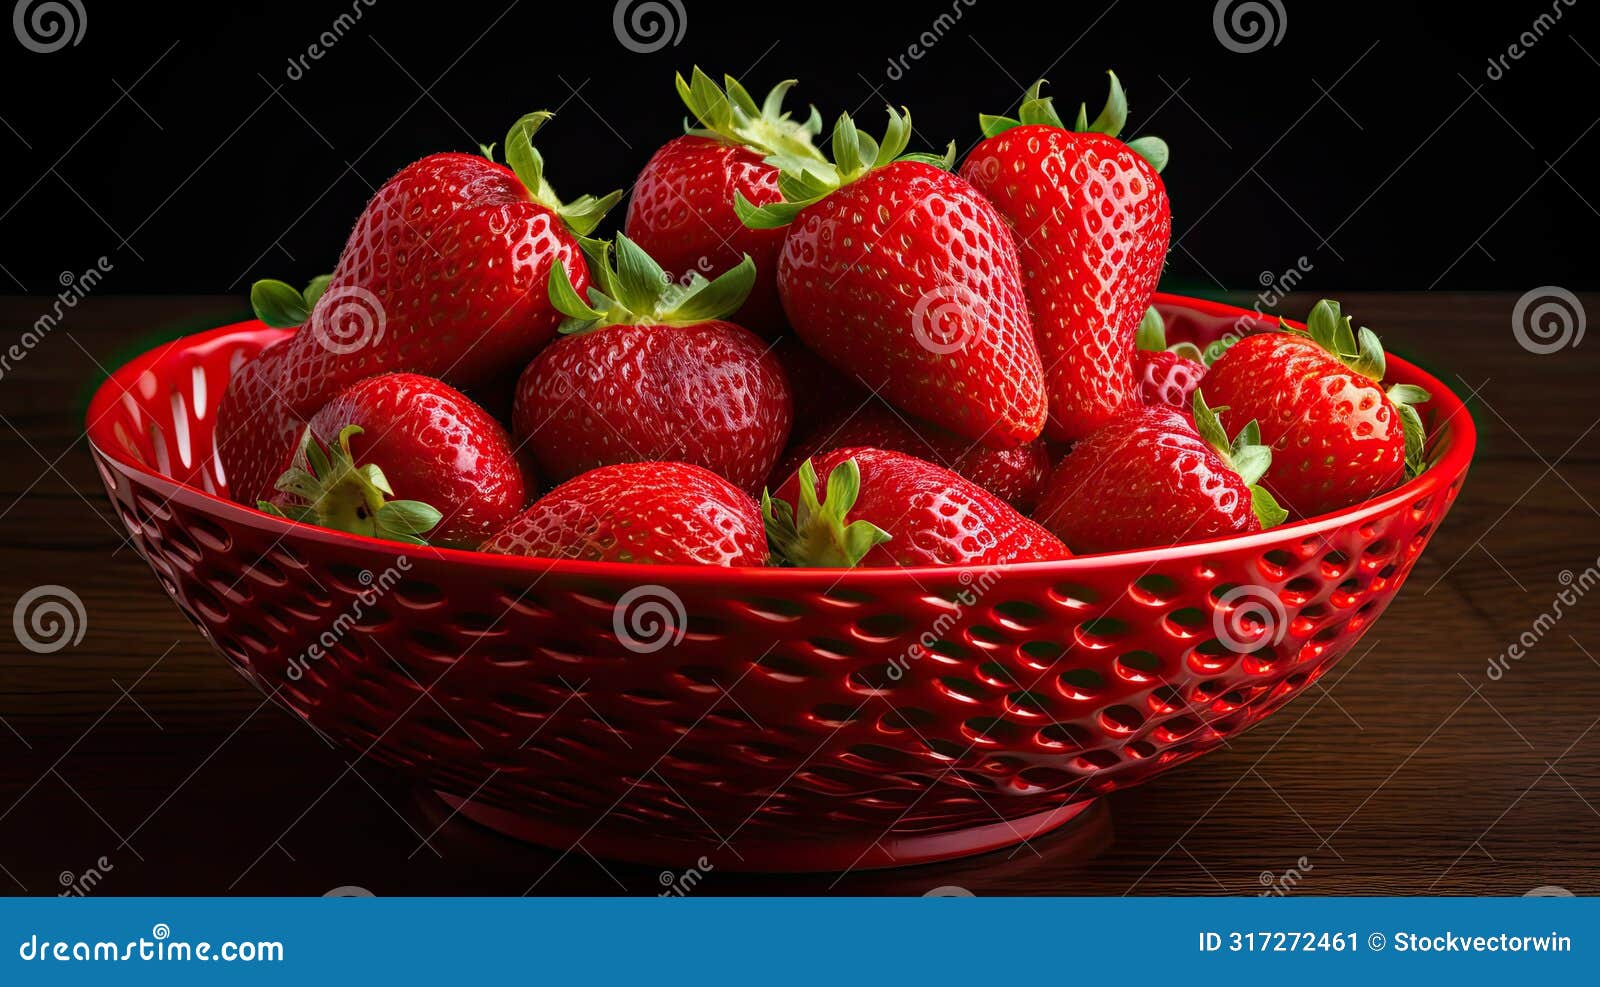 visually slice strawberry fruit